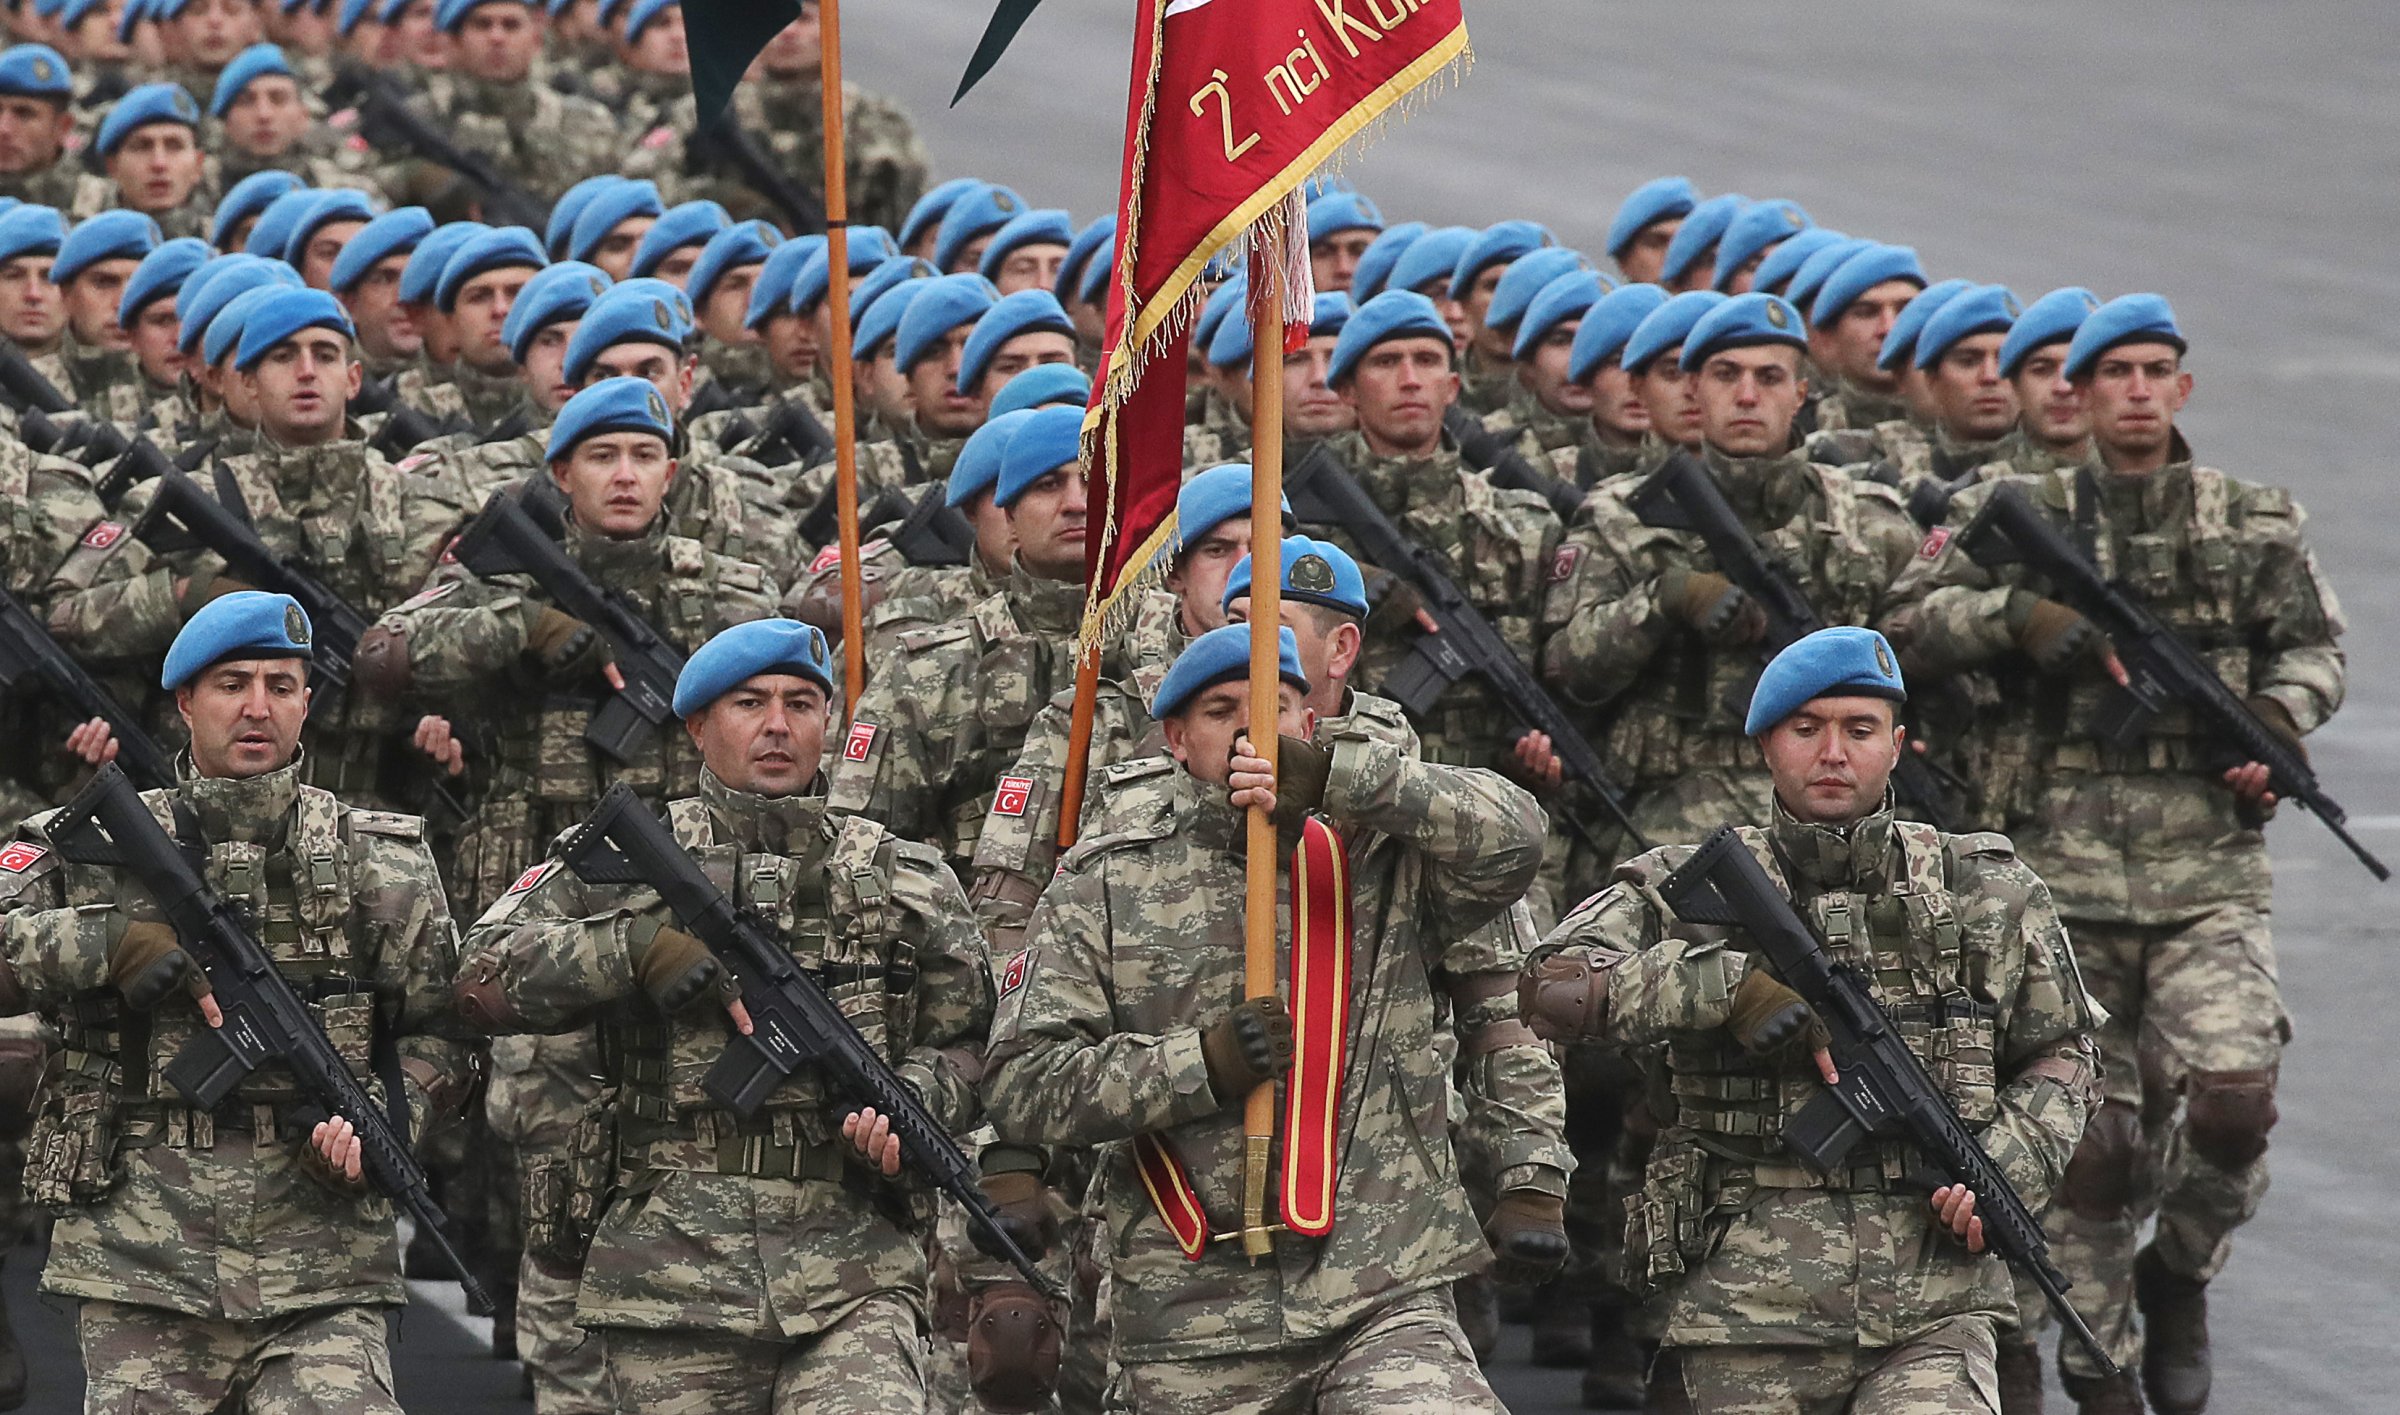 Military parade in Baku, Azerbaijan marks end of Nagorno Karabakh conflict